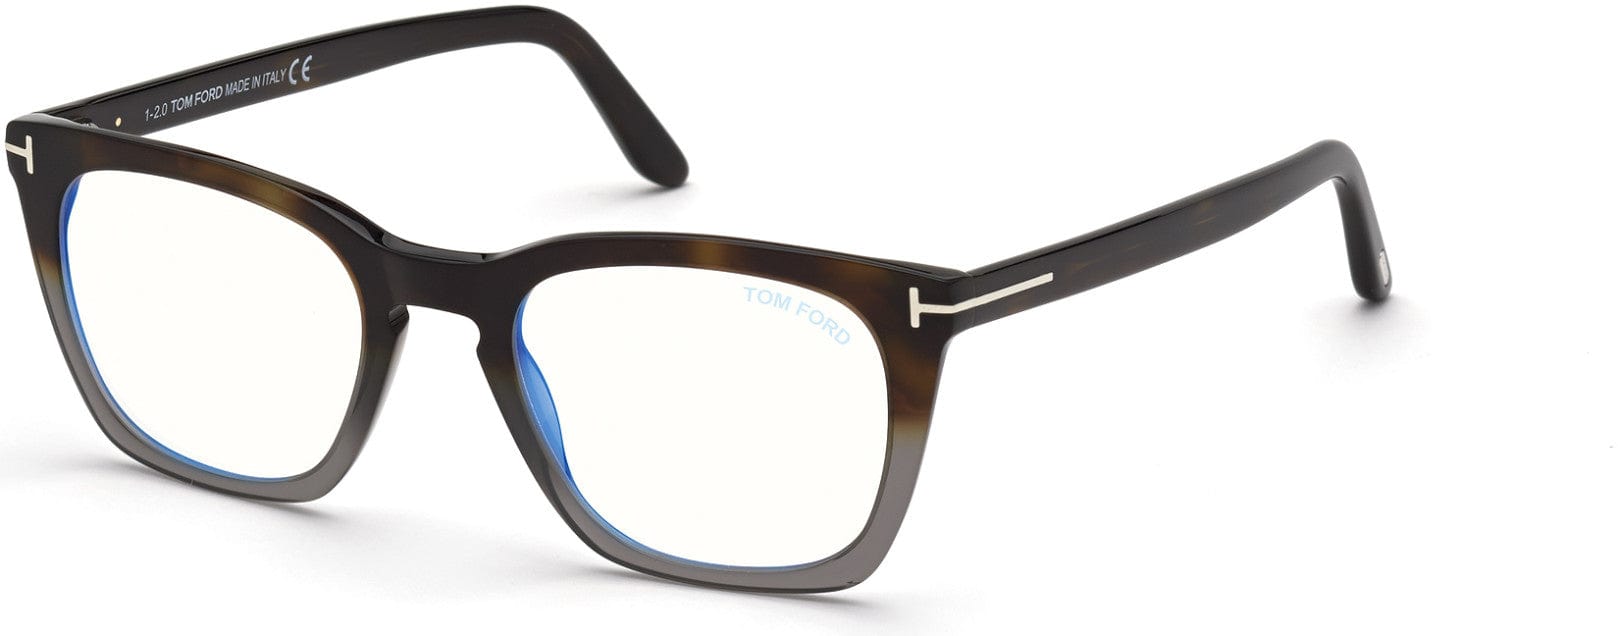 Tom Ford FT5736-B Square Eyeglasses 055-055 - Shiny Havana To Grey, Shiny Palladium "t" Logo / Blue Block Lenses